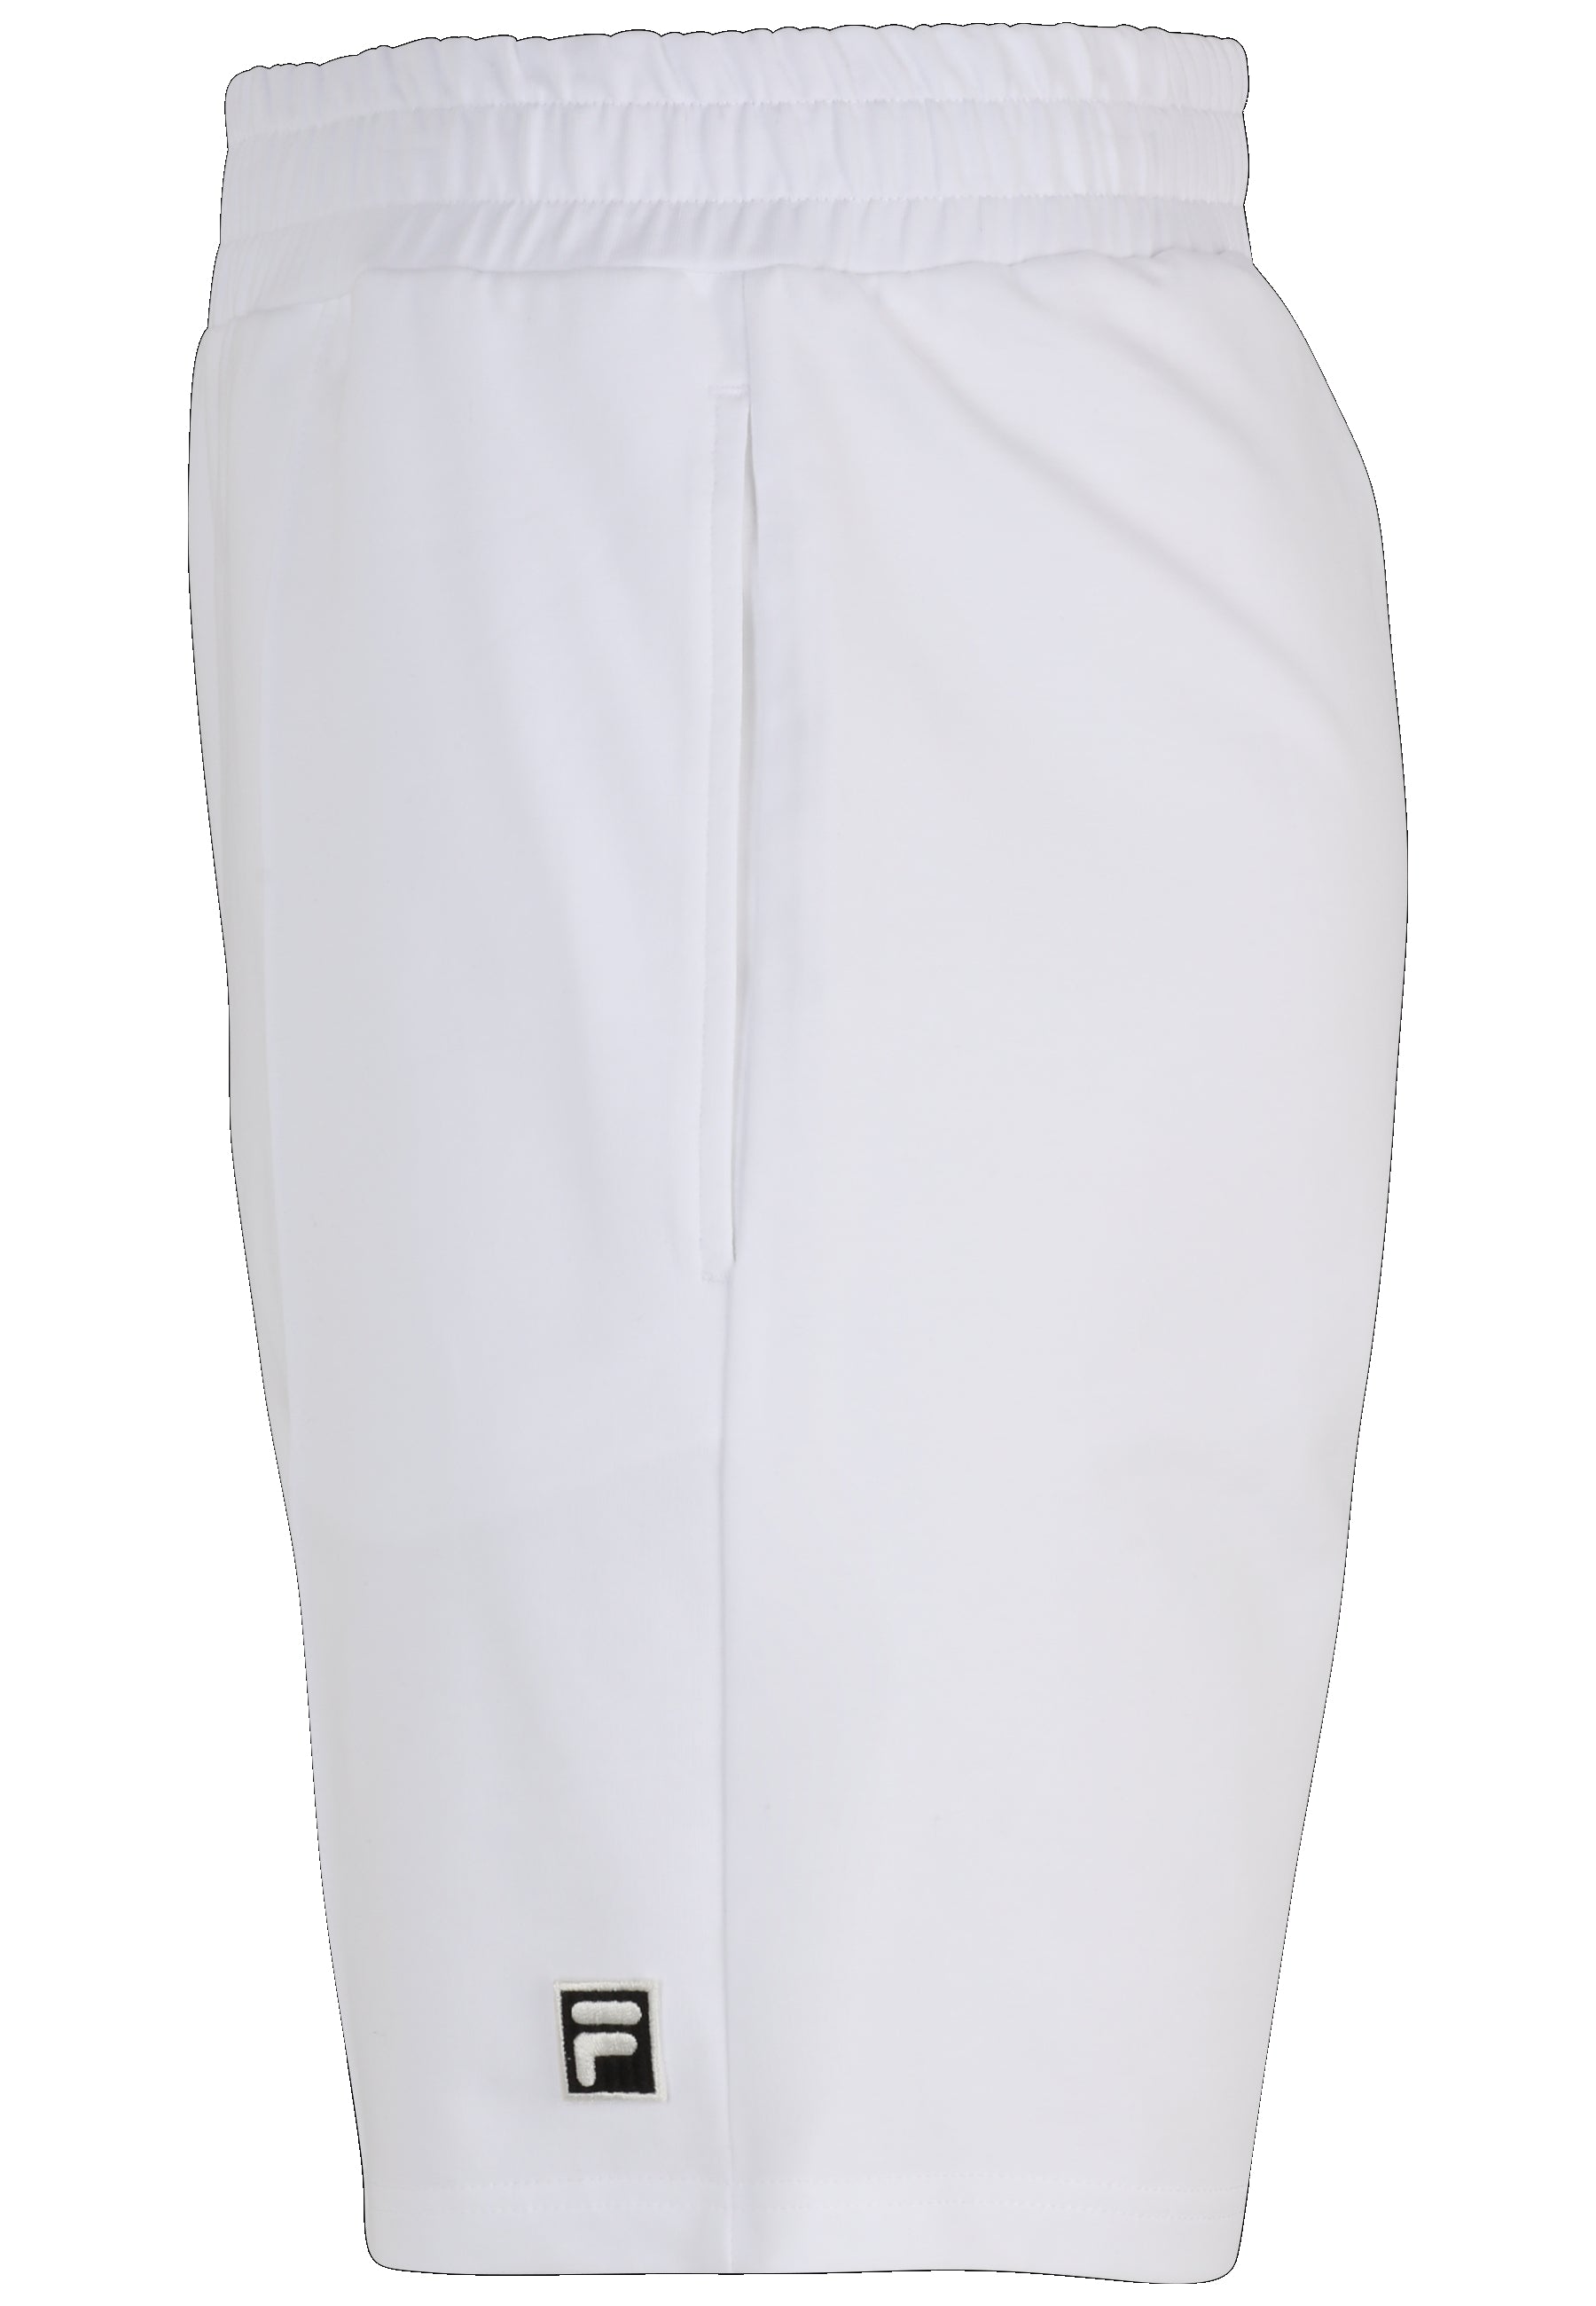 Boyabat Shorts in Bright White Sweatshorts Fila   